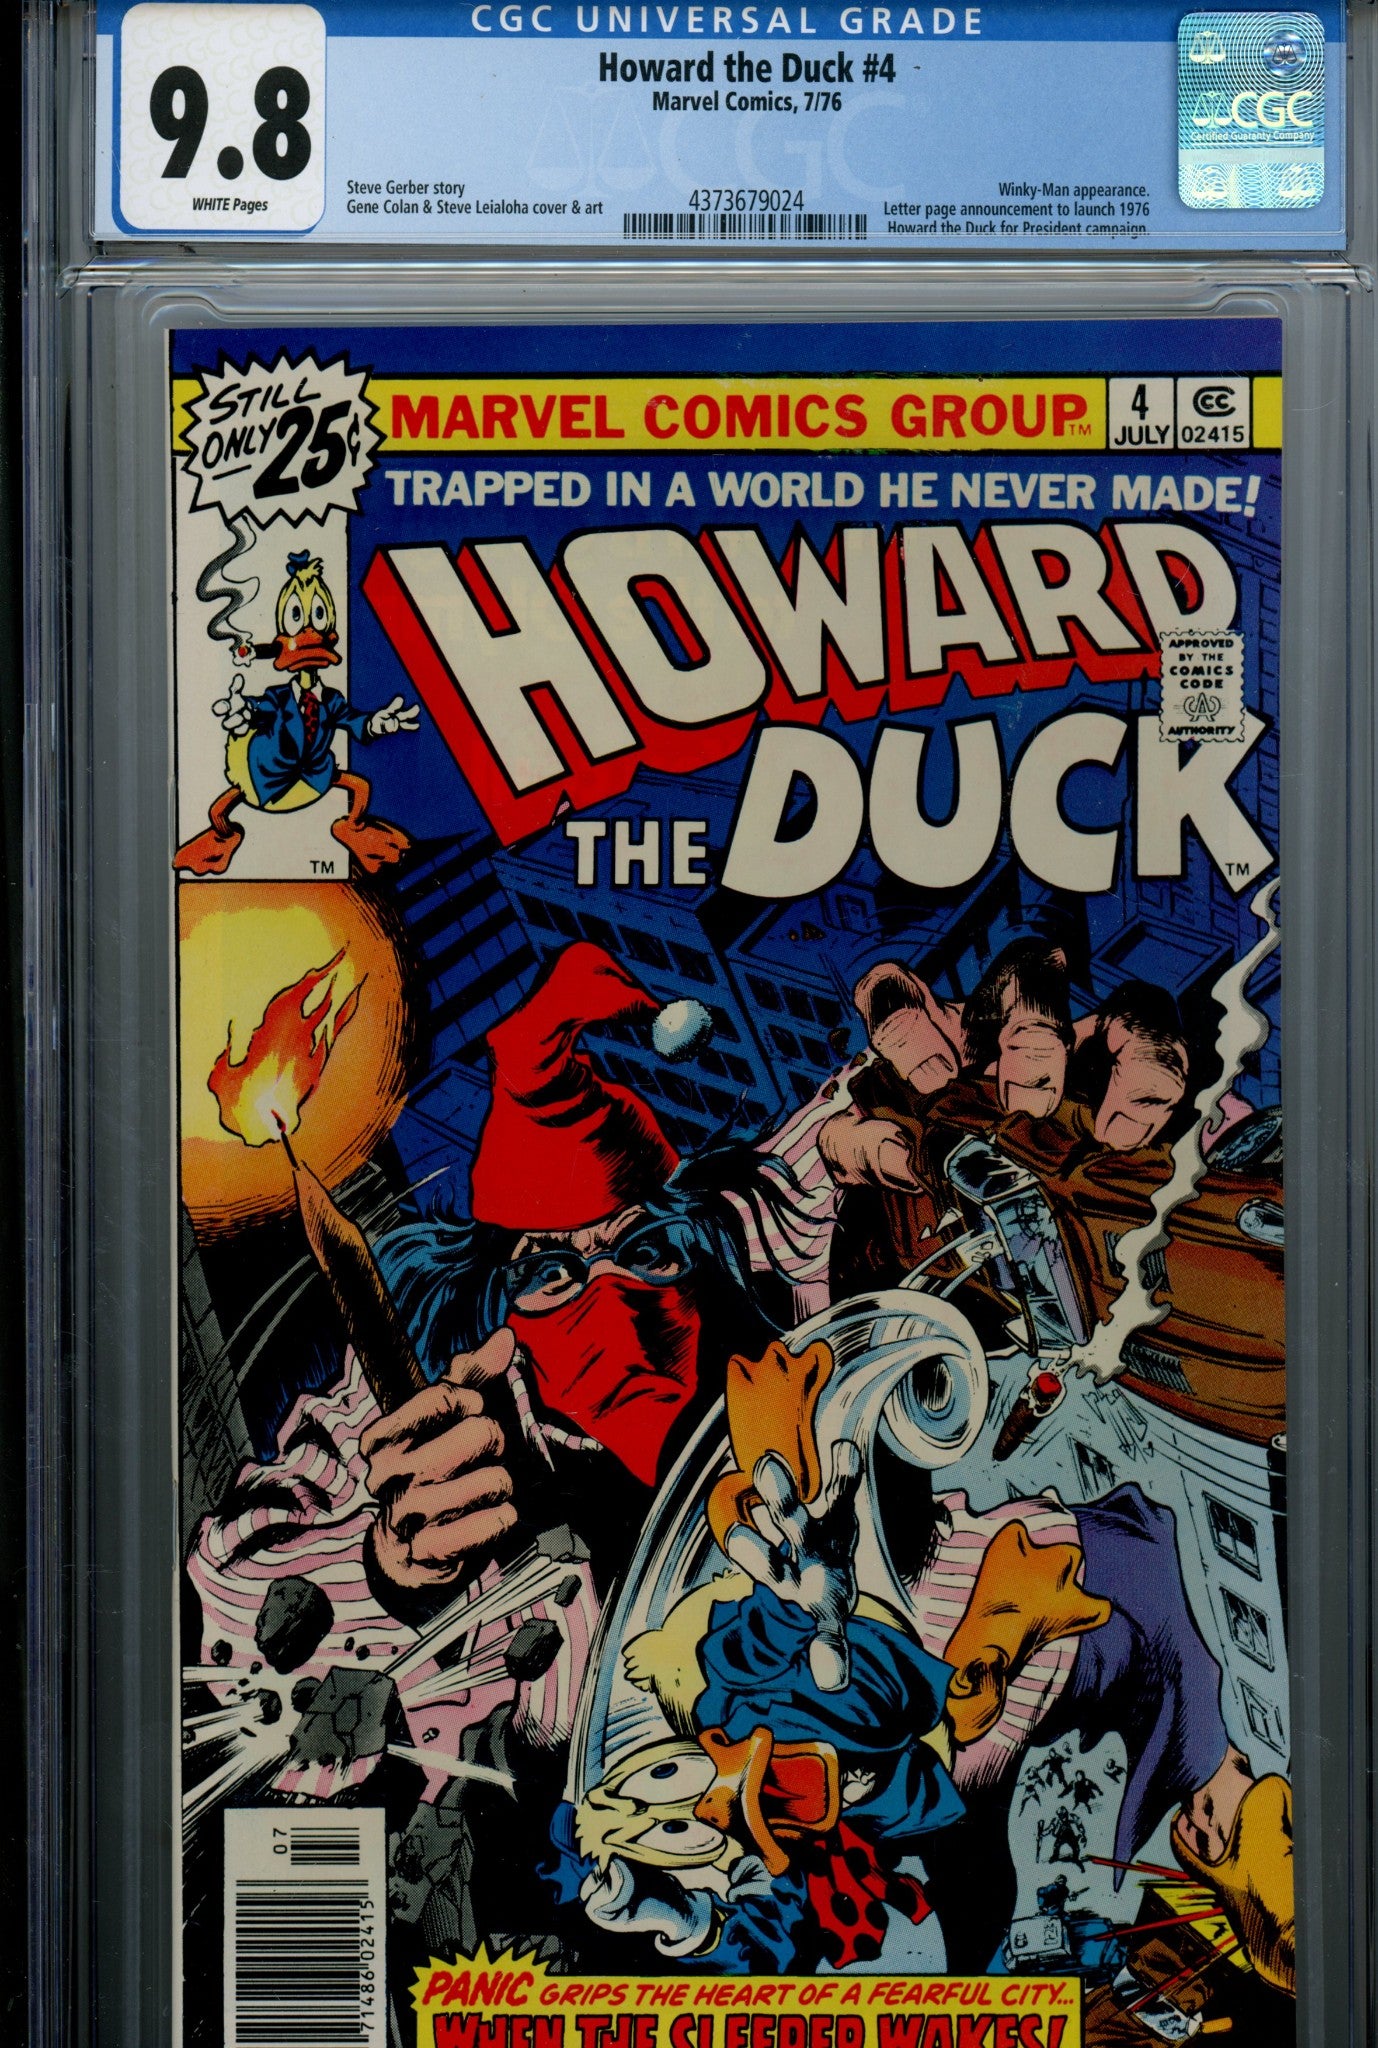 Howard the Duck Vol 1 4 CGC 9.8 (NM/M) (1976) 